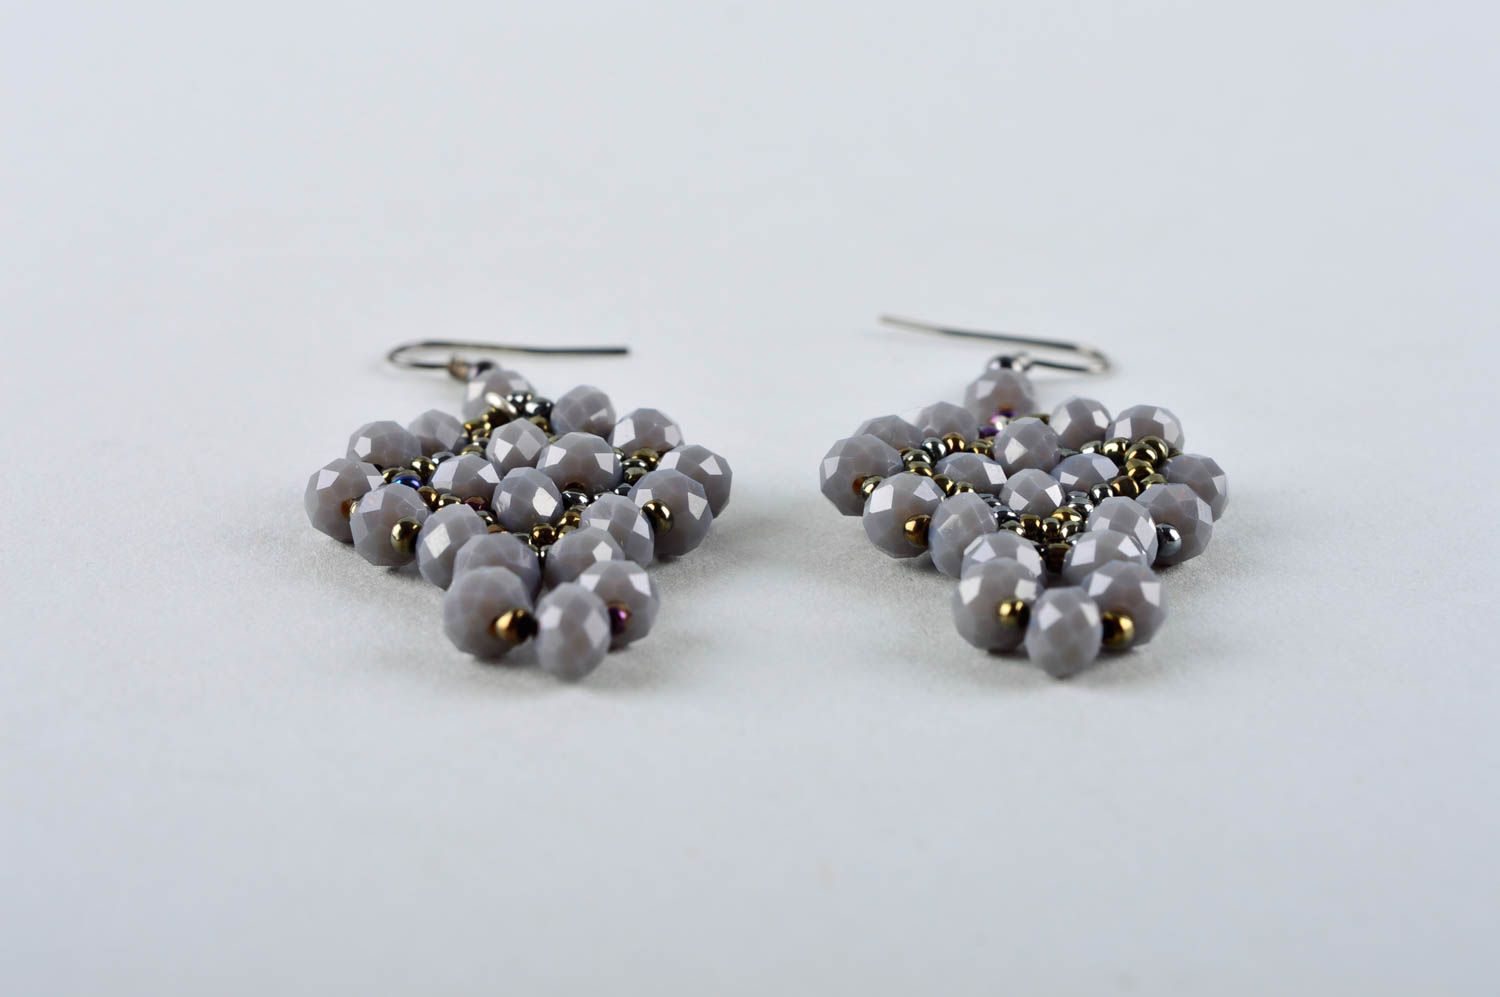 Handmade earrings bead earrings designer accessories fashion jewelry gift ideas photo 5